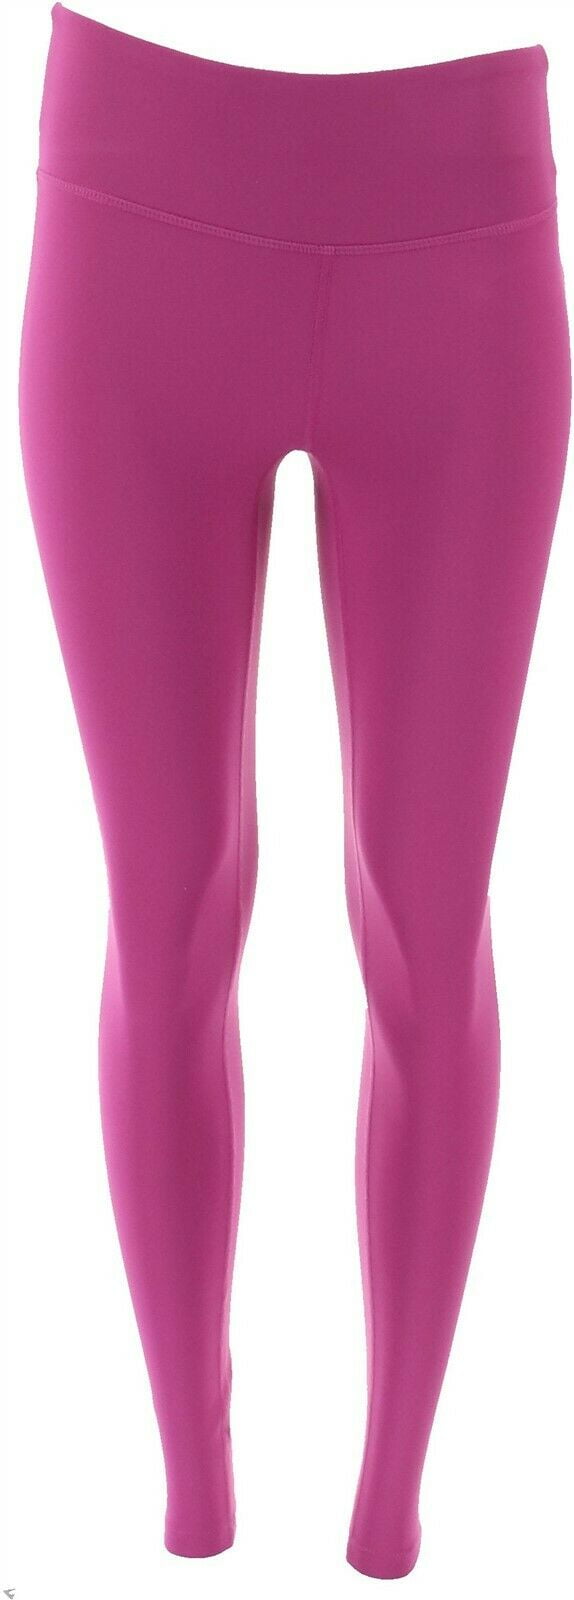 new balance pink leggings